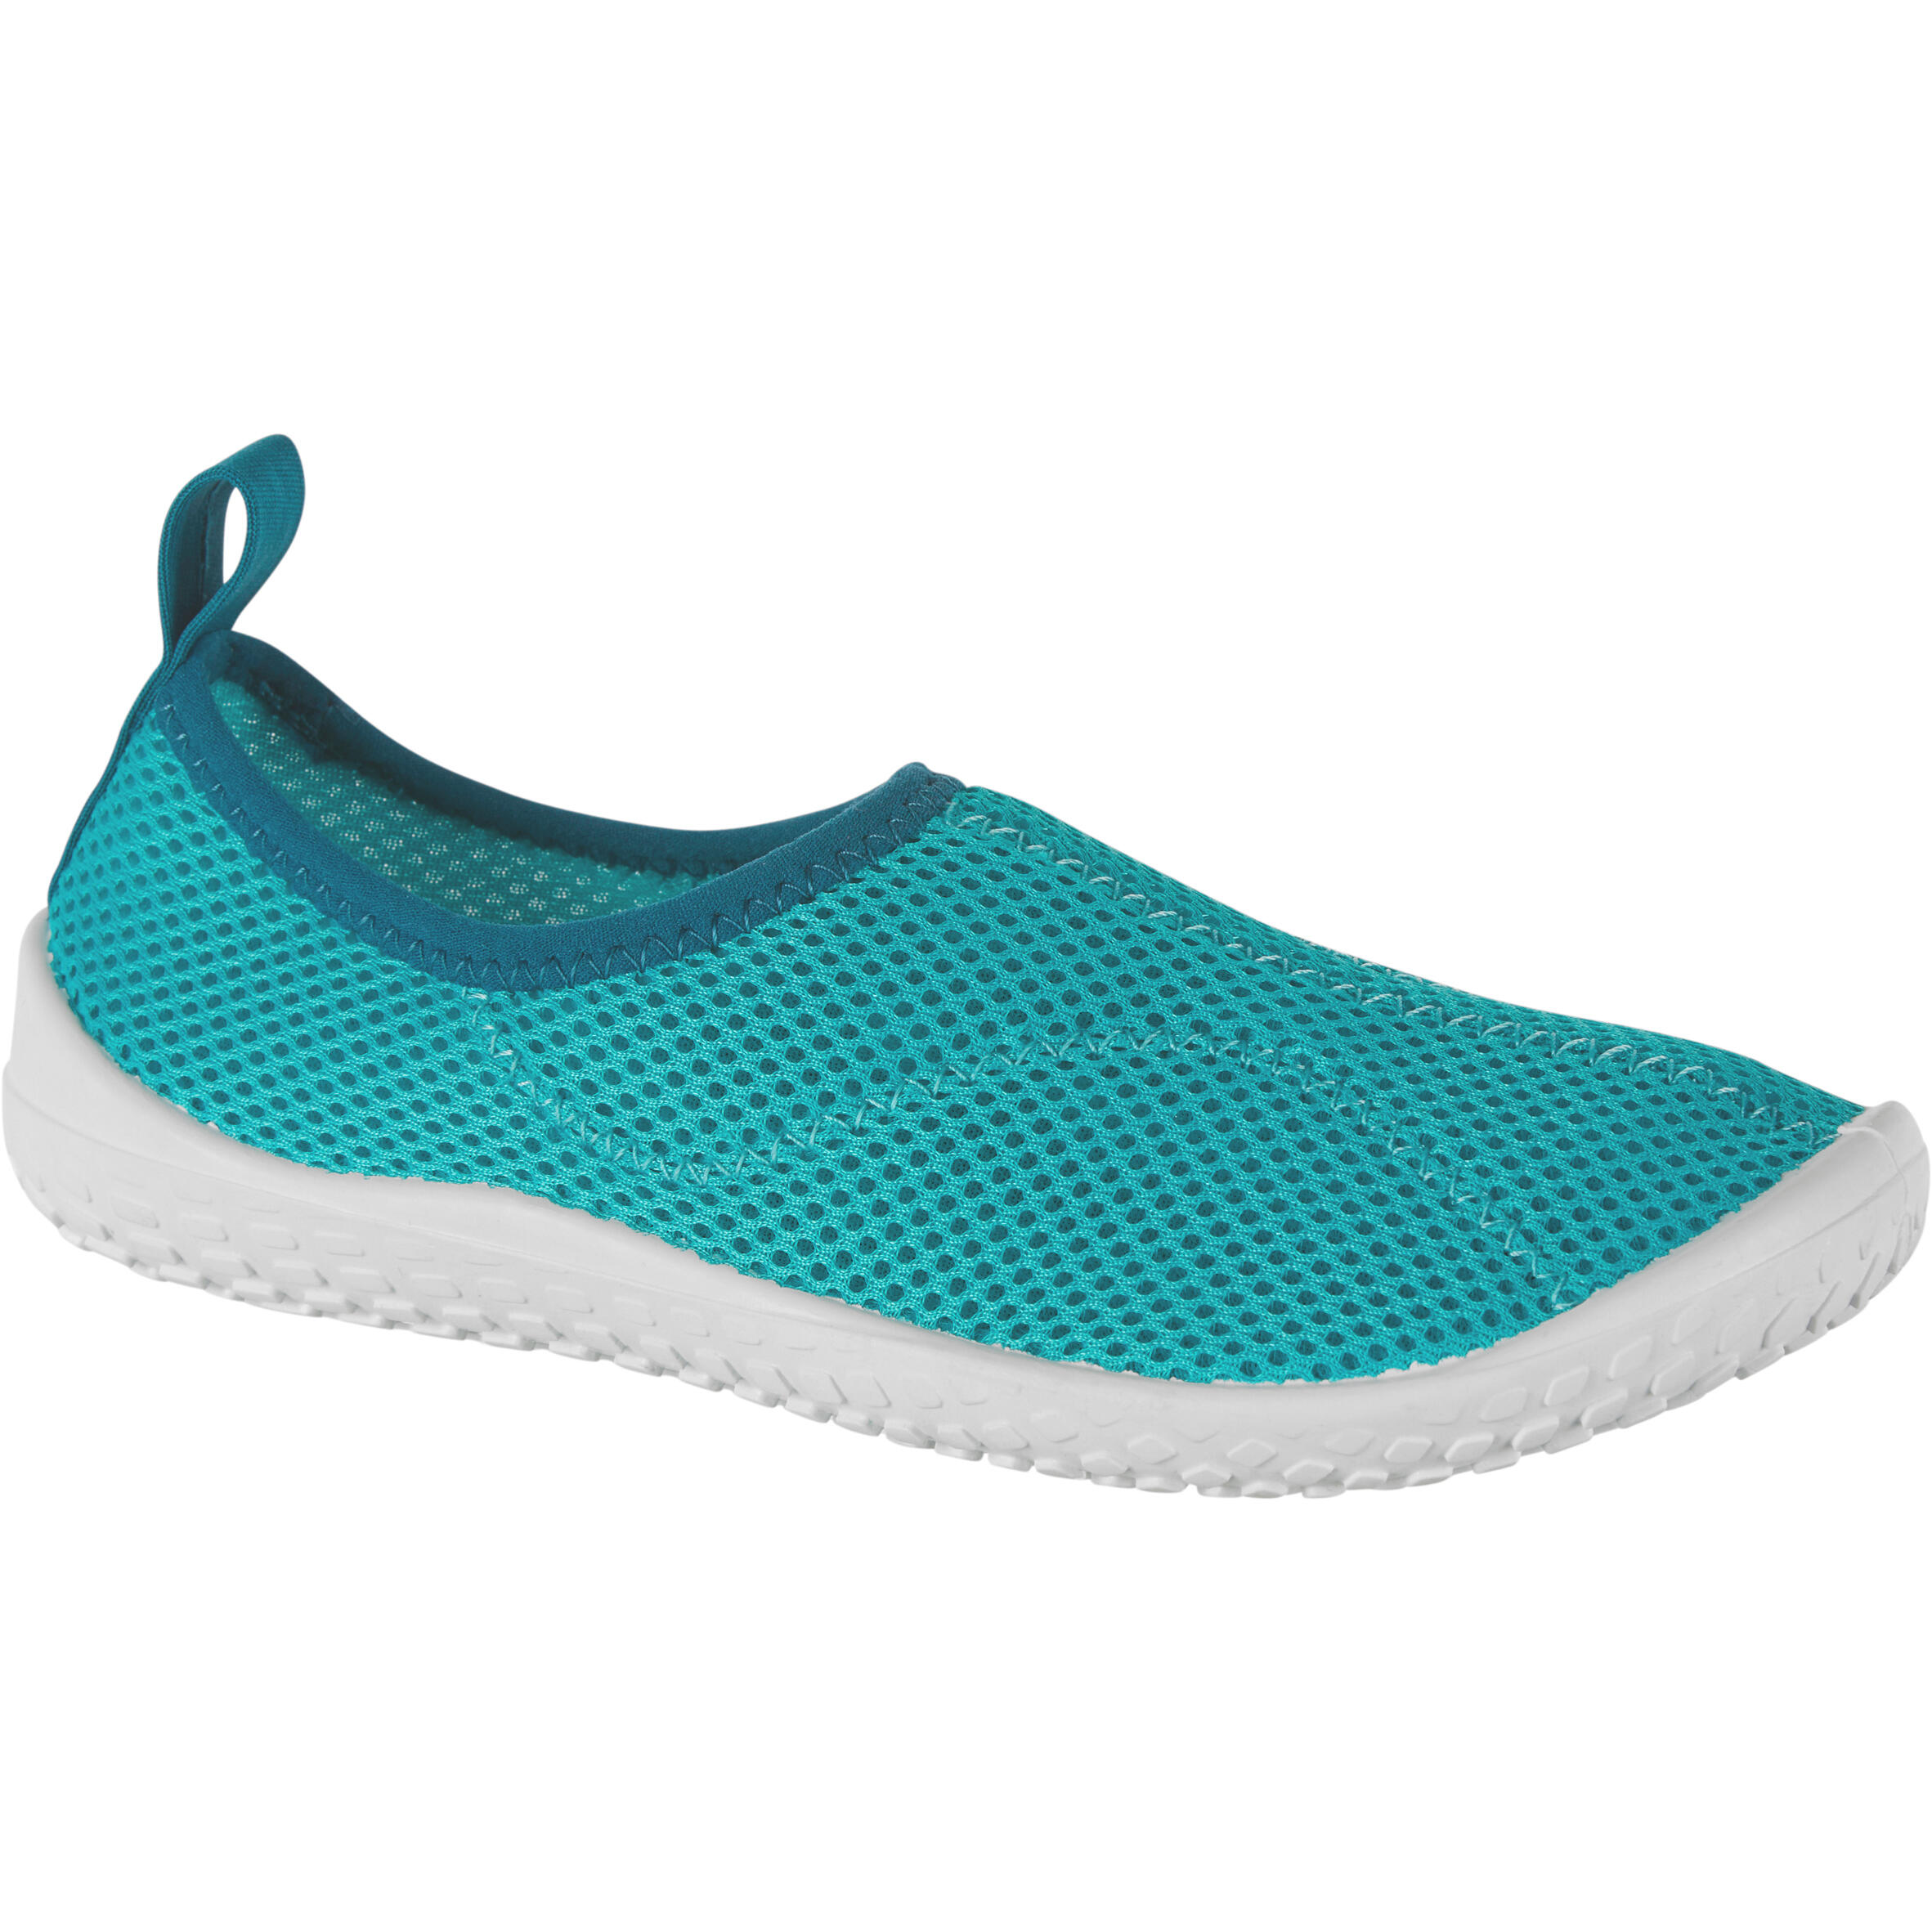 Subea - Aquashoes - Turquoise